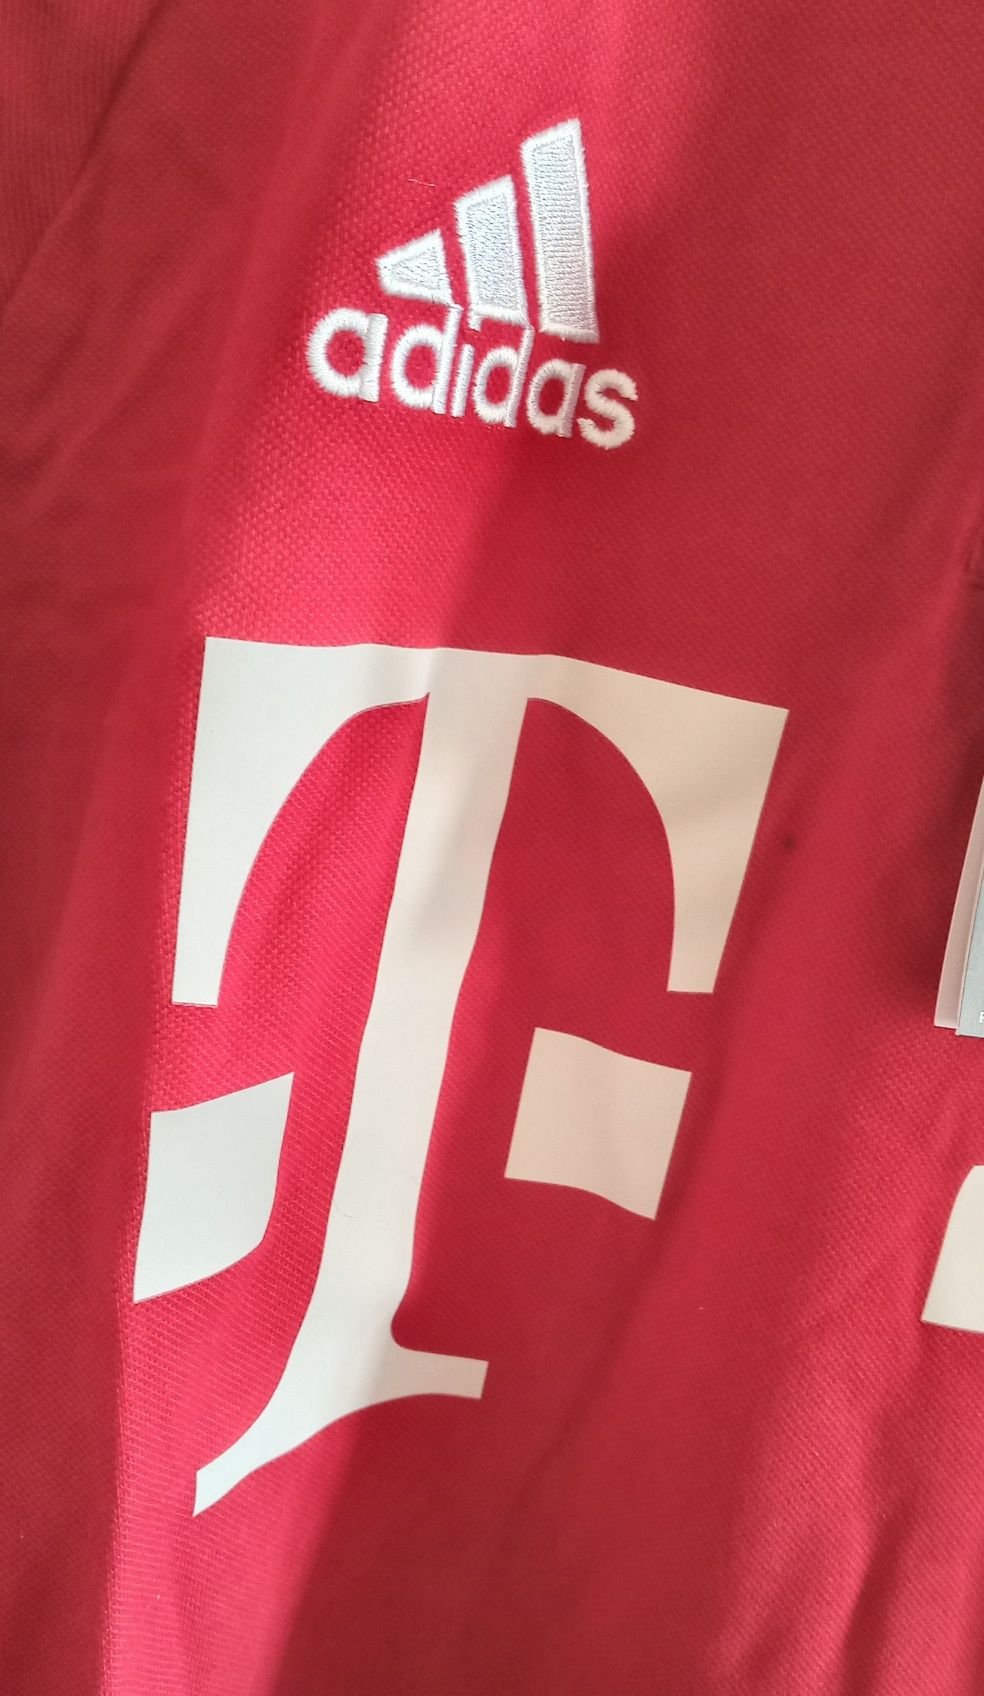 Футболка-поло Bayern Munchen, Adidas, Баварія Мюнхен, футбол, football